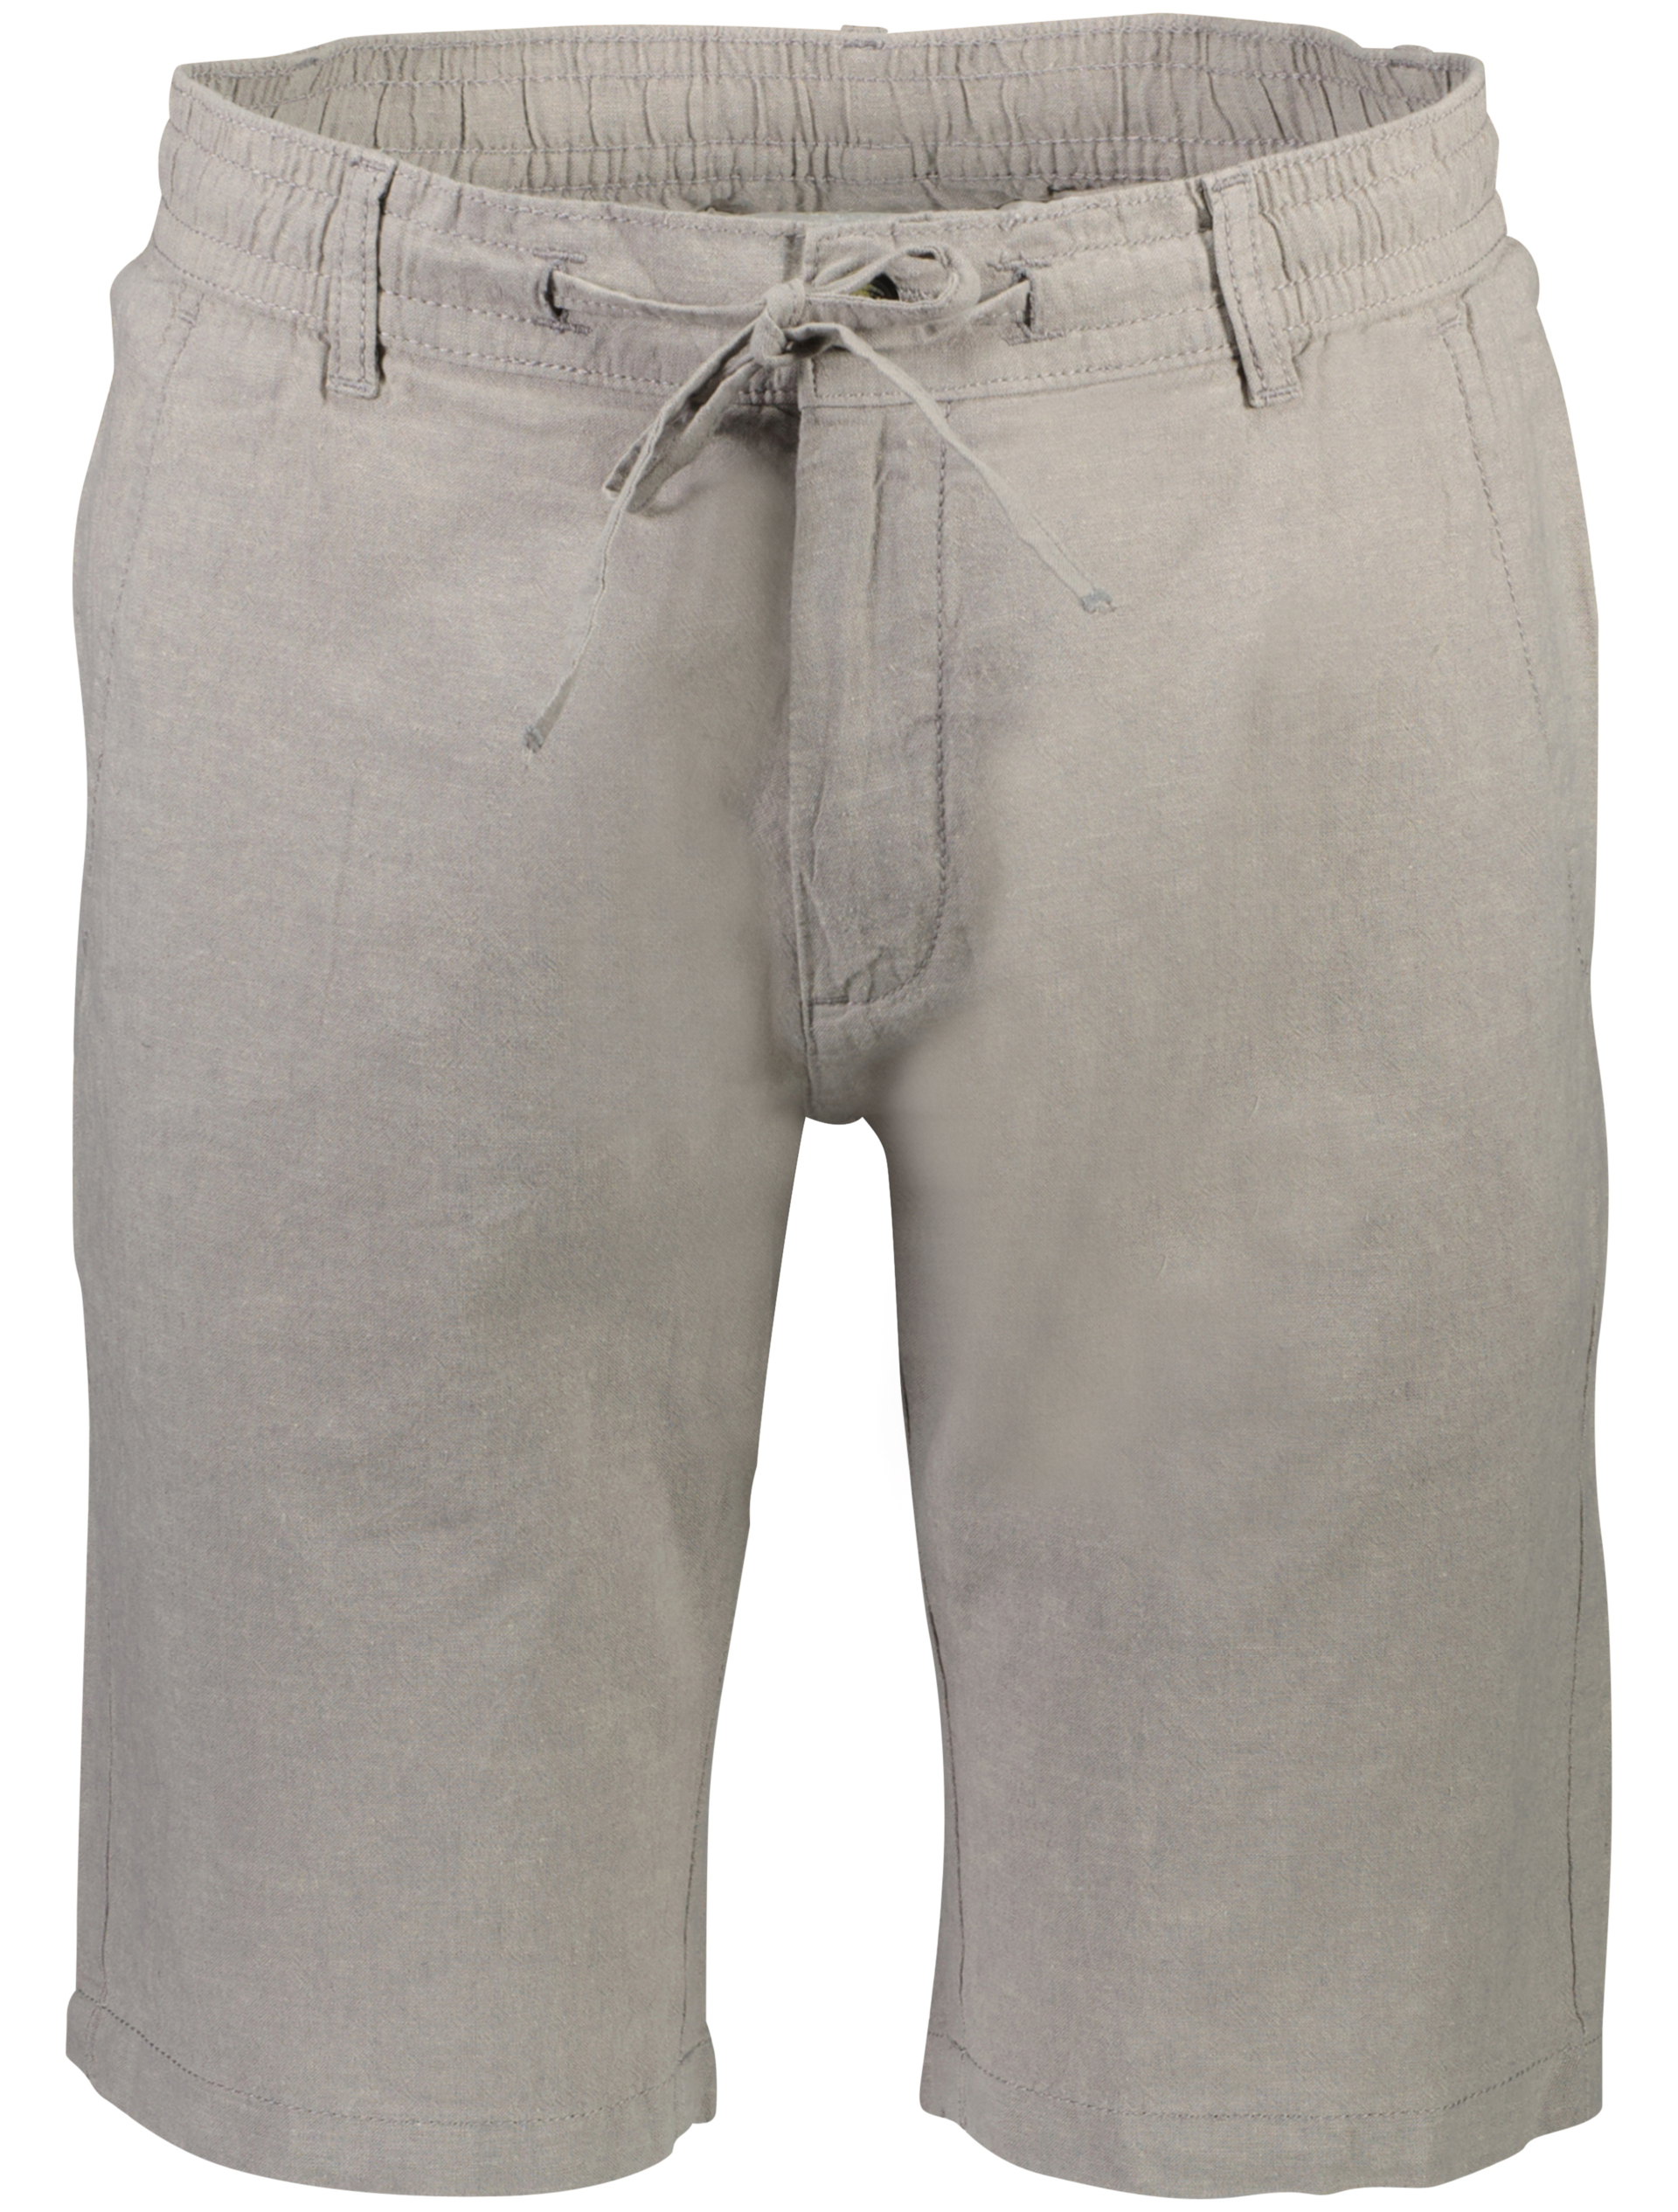 Lindbergh Linen shorts grey / grey